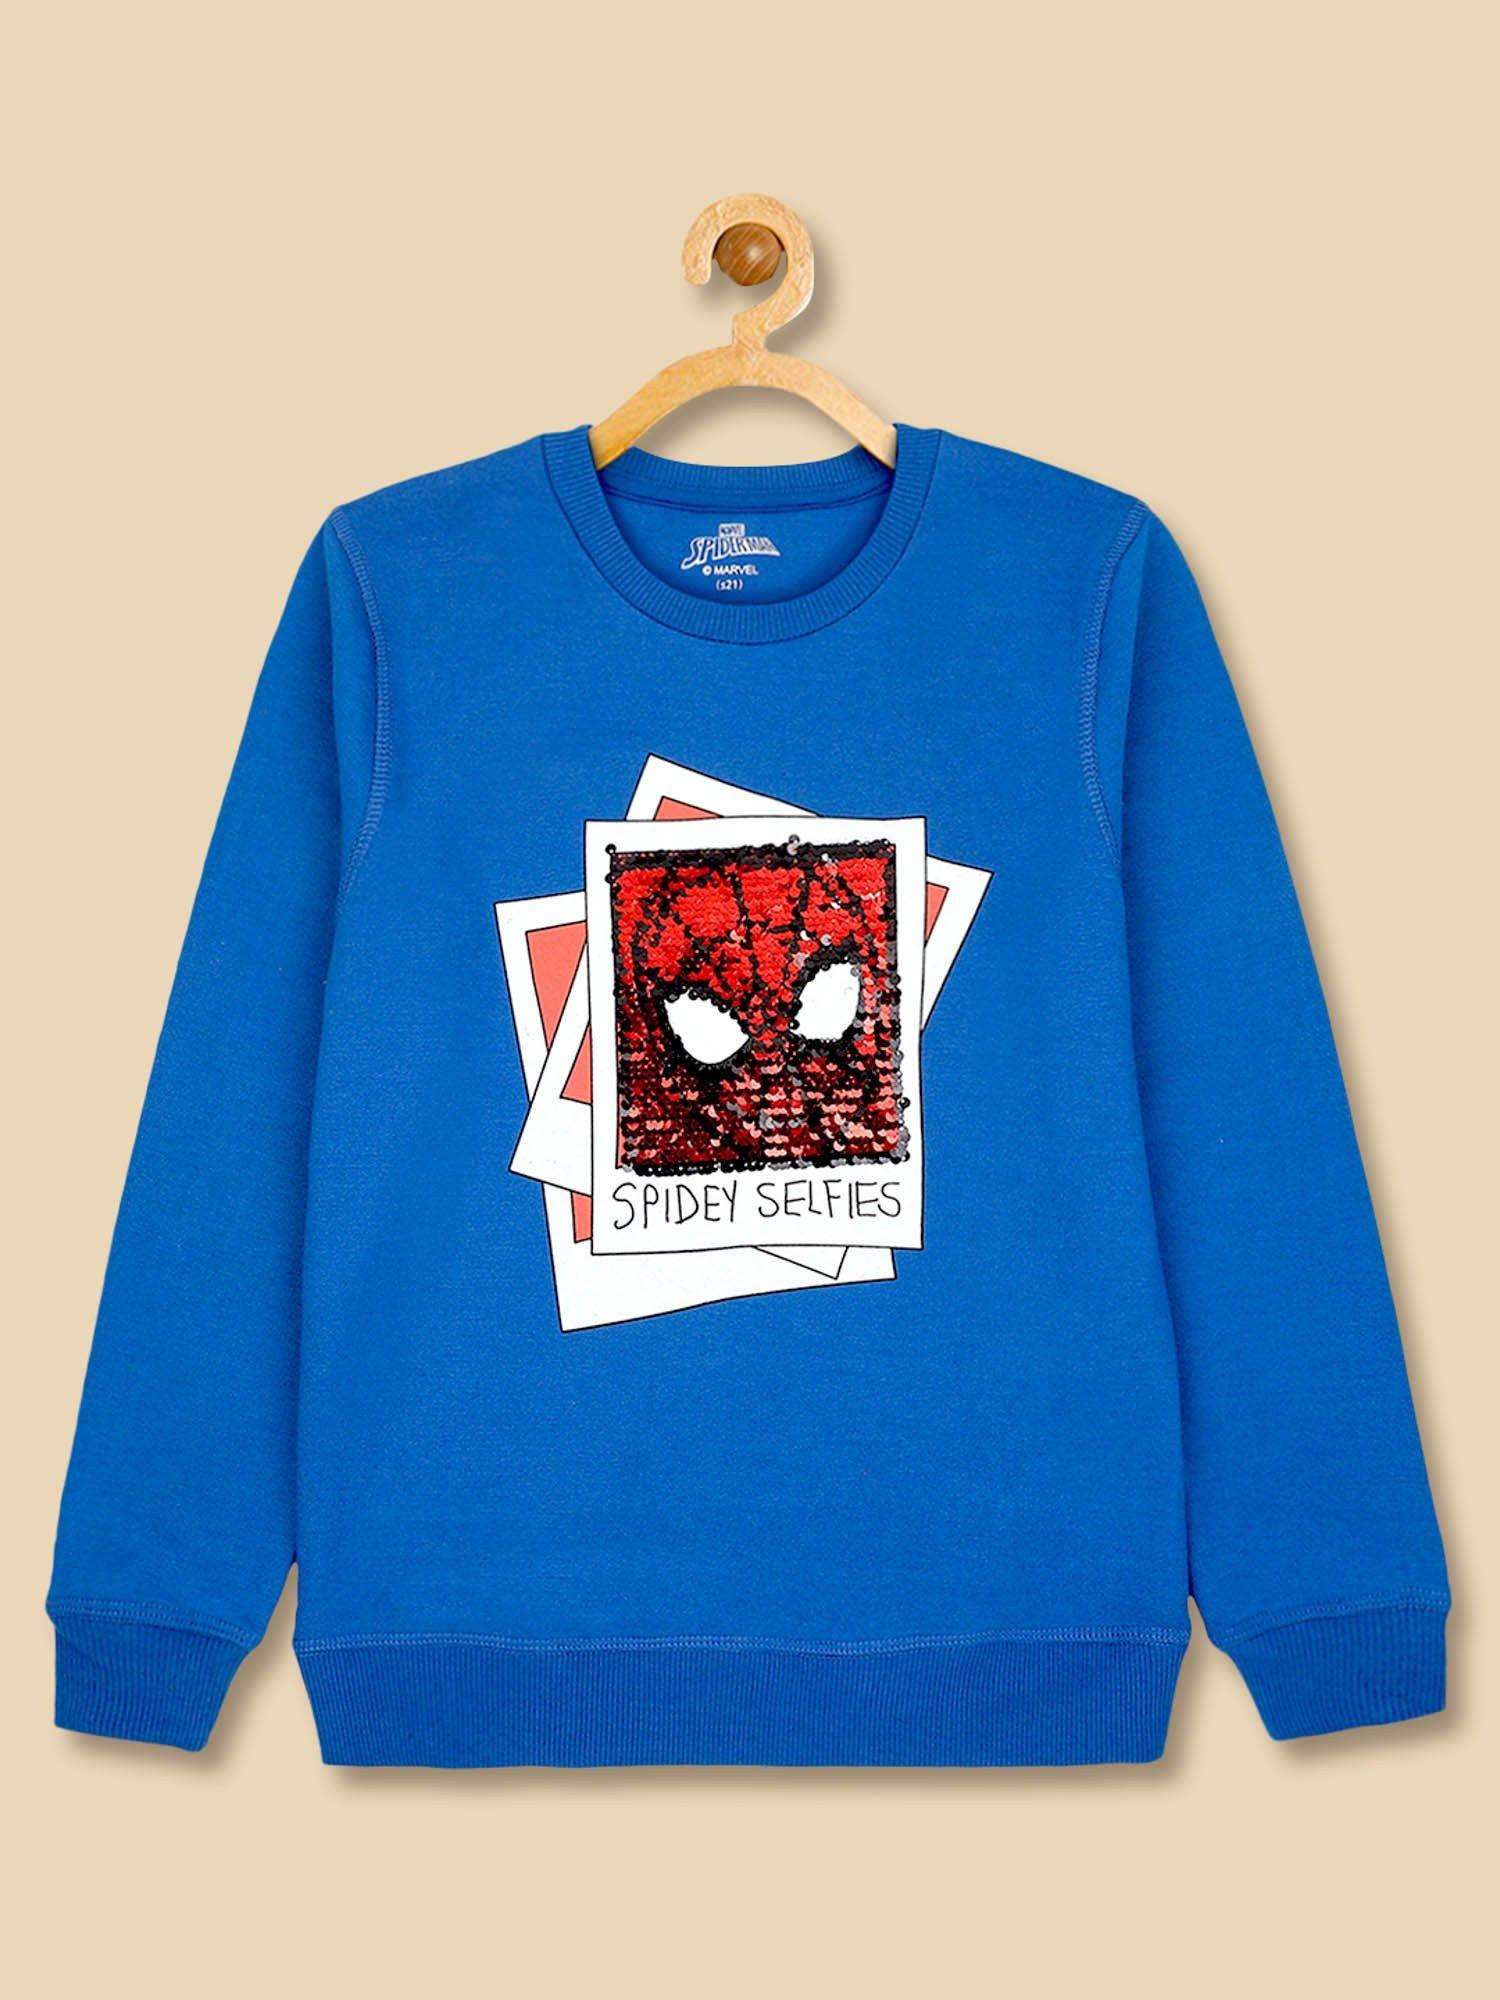 spiderman printed blue sweatshirt for boys